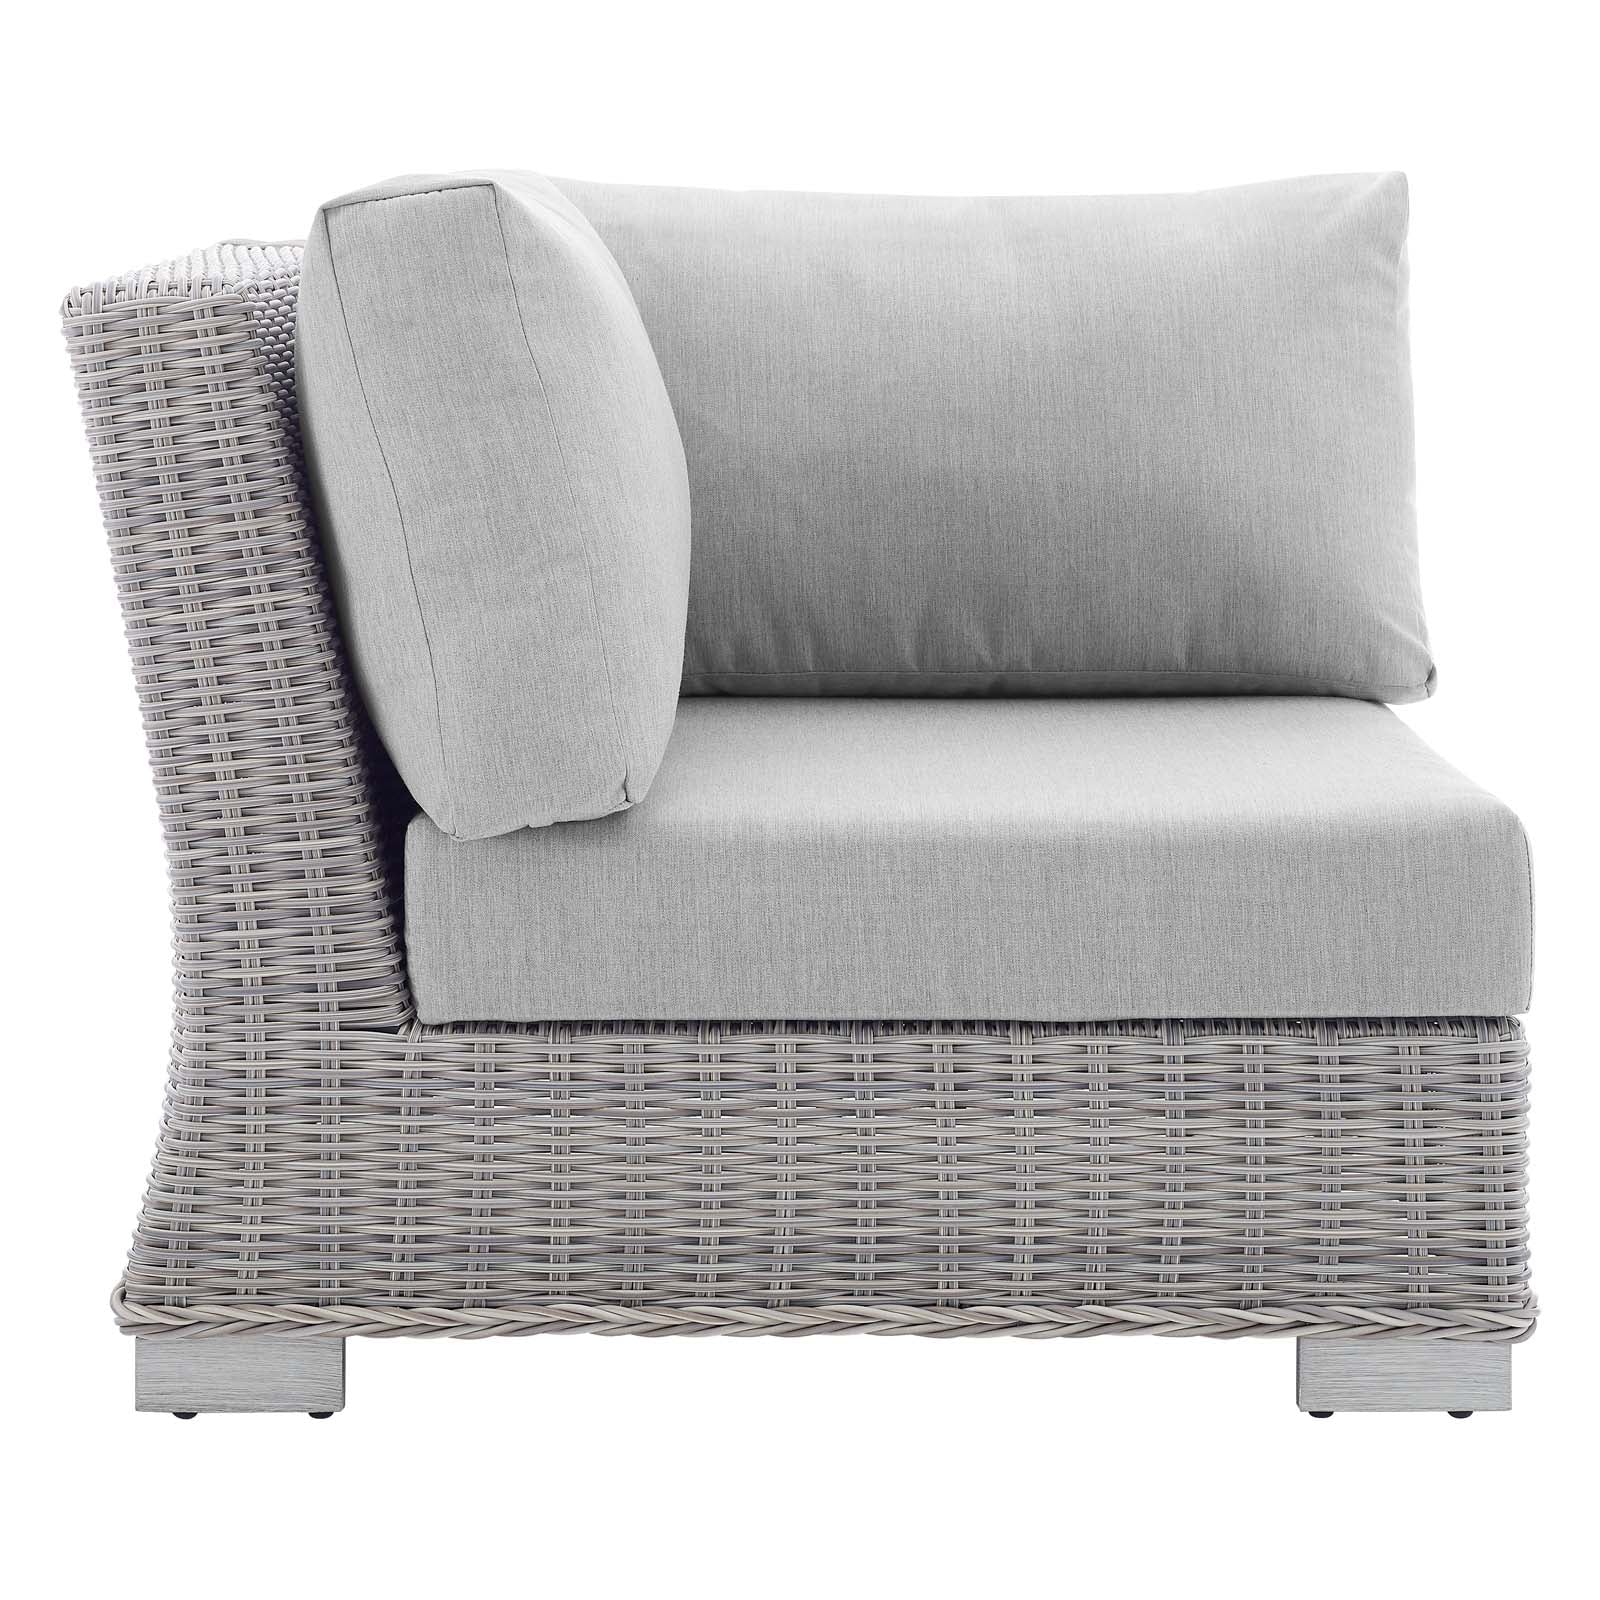 Conway Sunbrella® Outdoor Patio Wicker Rattan Corner Chair - East Shore Modern Home Furnishings